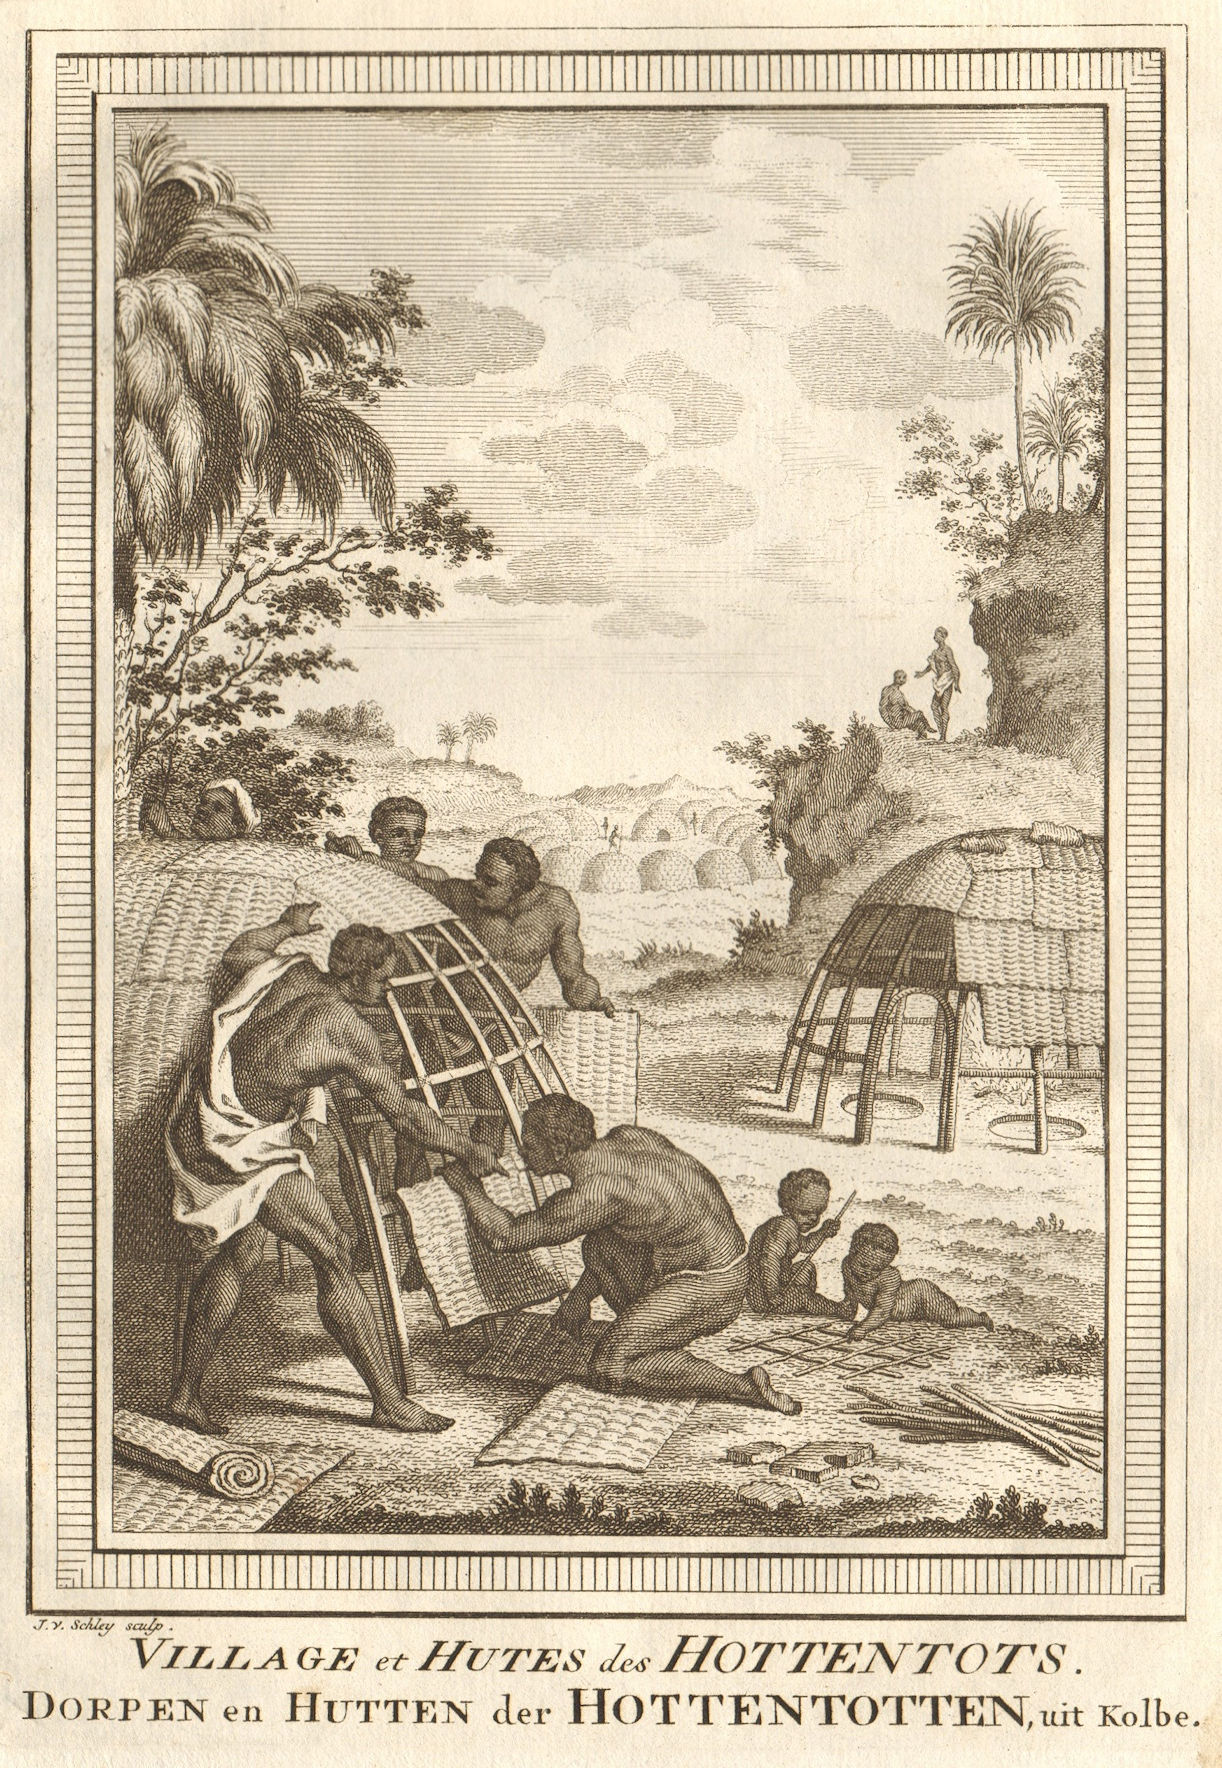 Associate Product 'Village & Hutes des Hottentots'. Southern Africa. Khoikhoi village. SCHLEY 1748